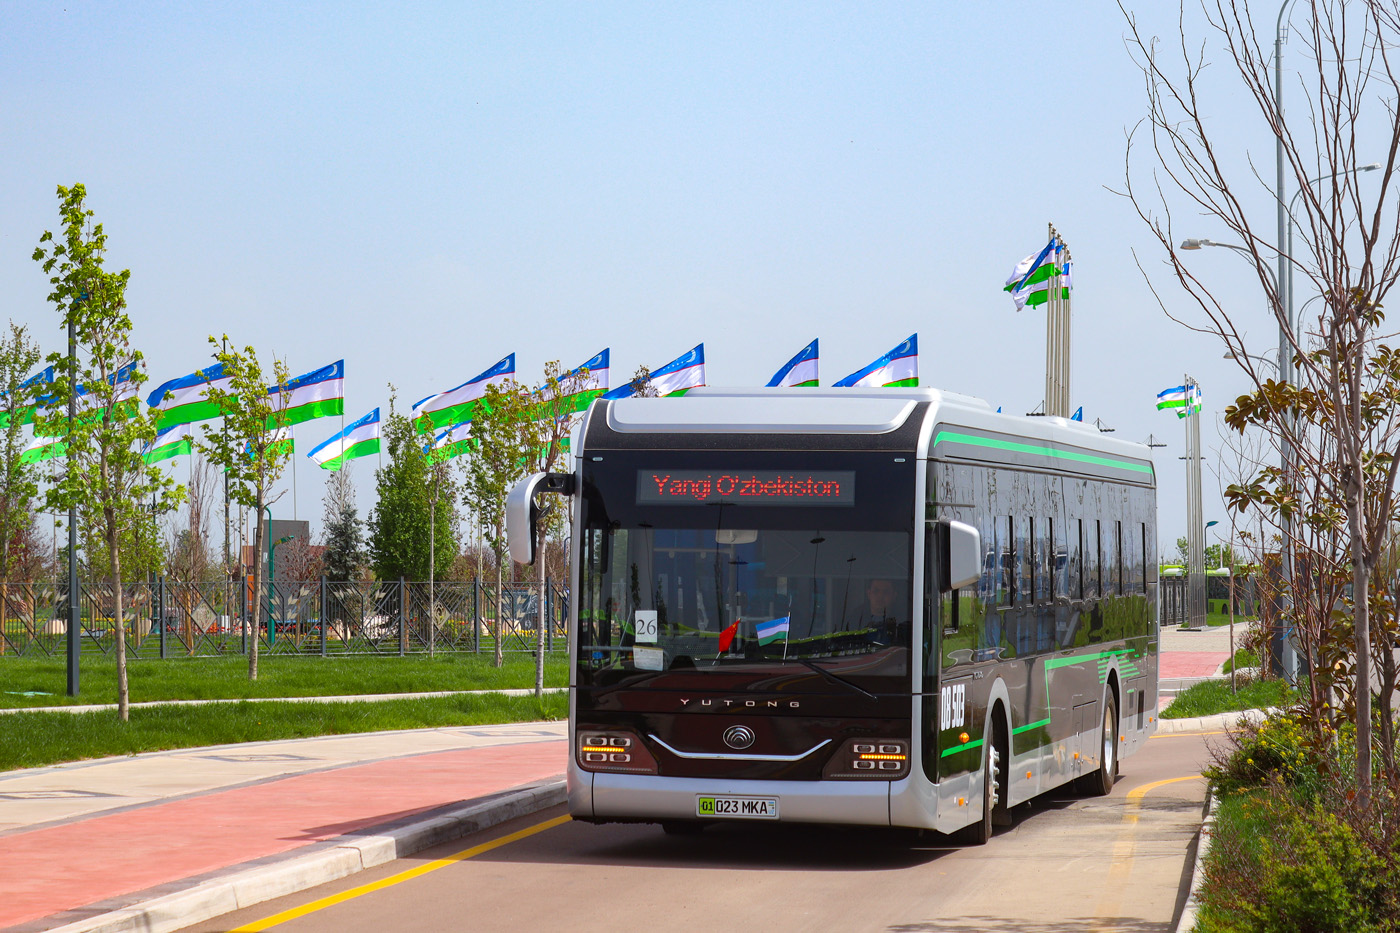 Taschkent — Presentatiom of new buses